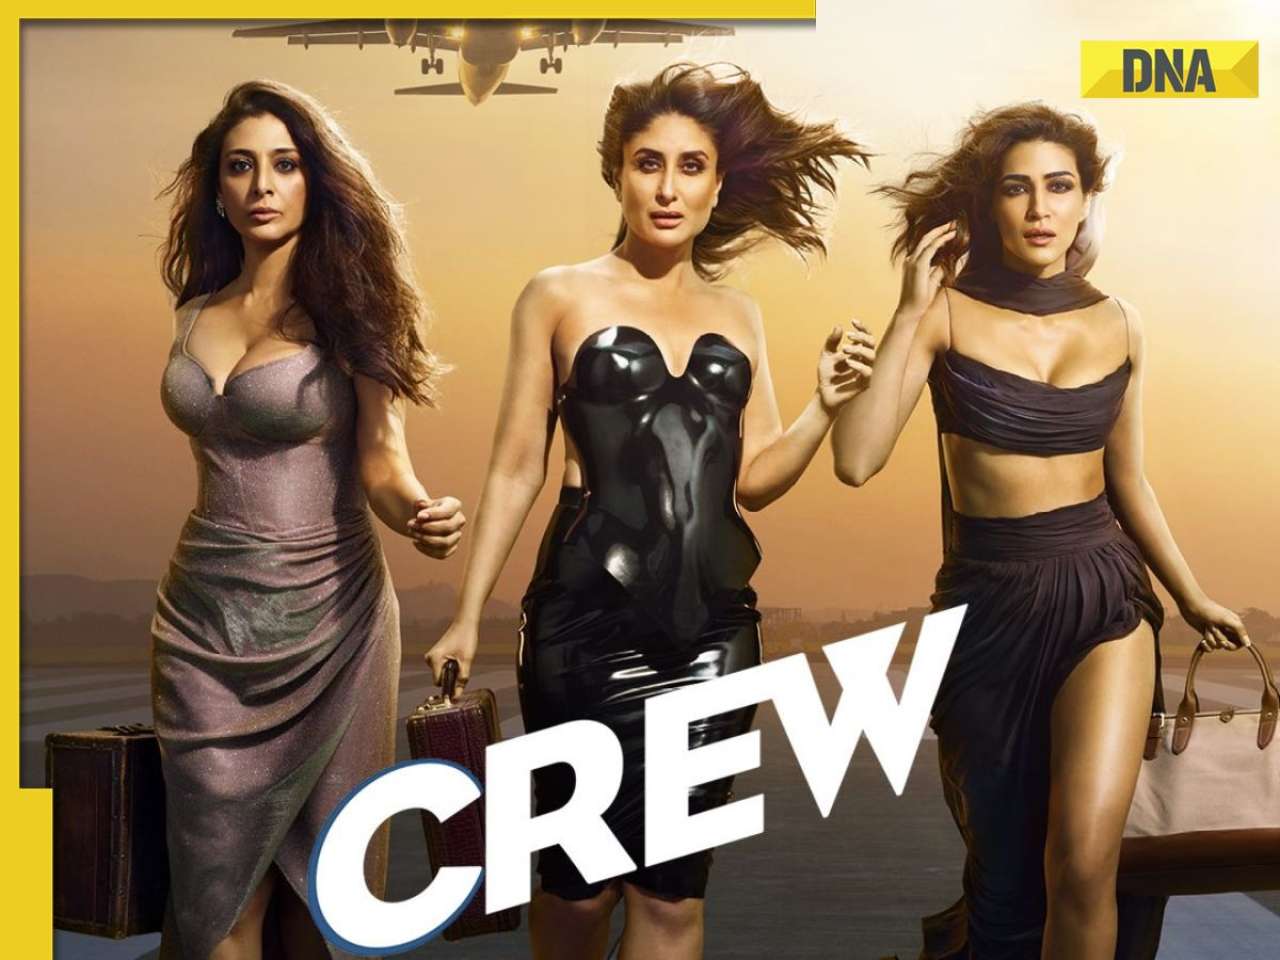 Crew box office collection day 9: Tabu, Kareena Kapoor, Kriti Sanon-starrer enters Rs 100-crore club